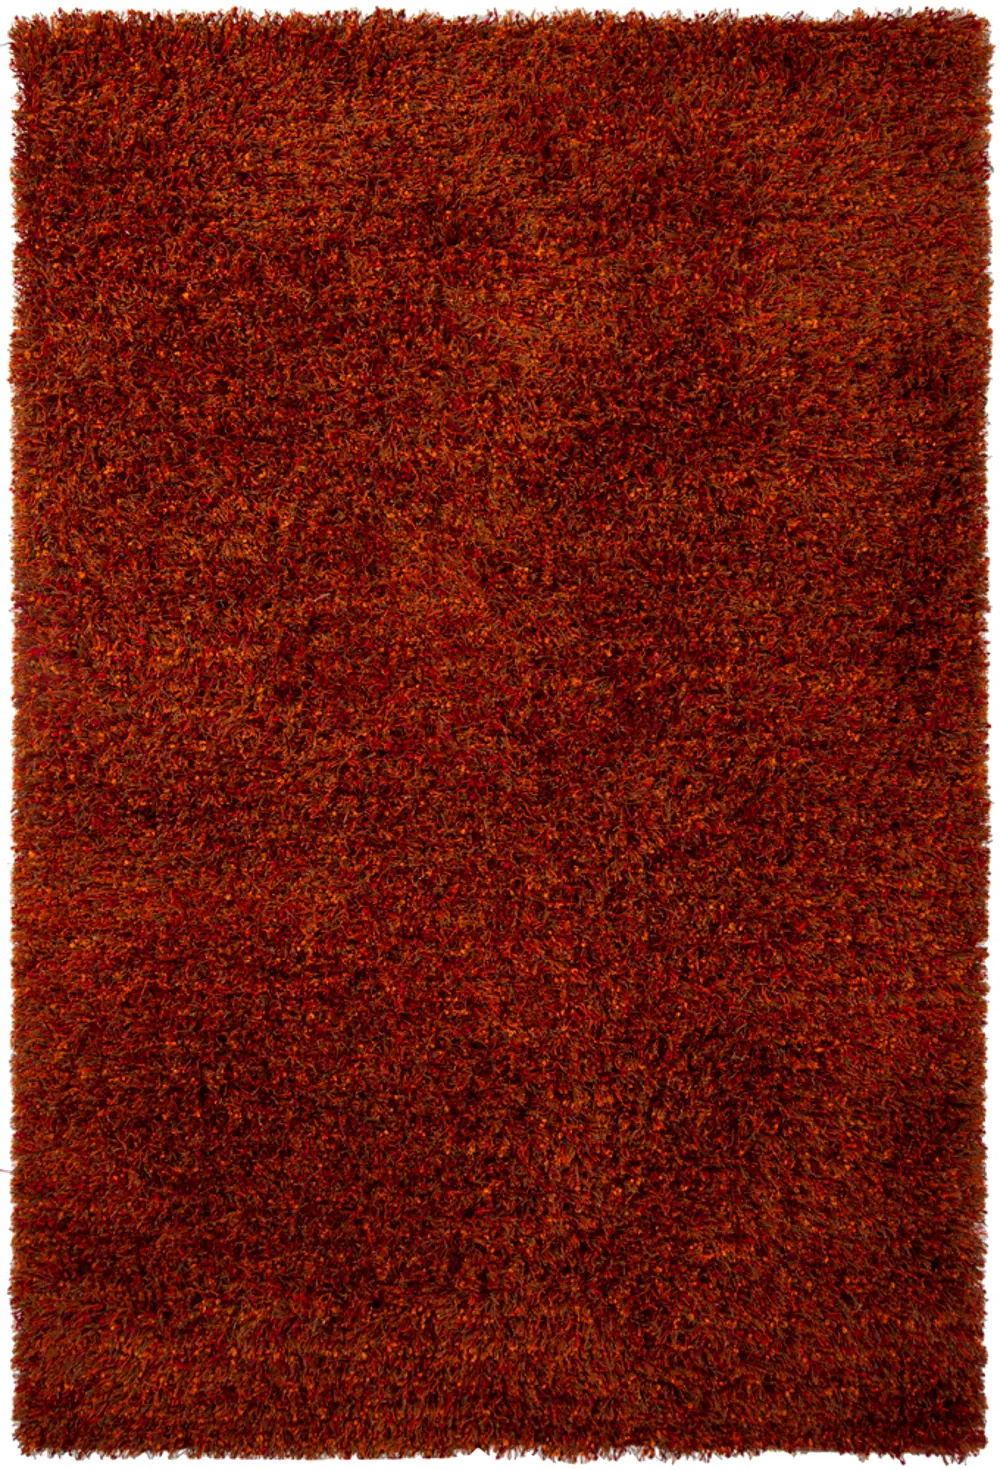 8 x 11 Large Contemporary Red-Orange Area Rug - Mai-1